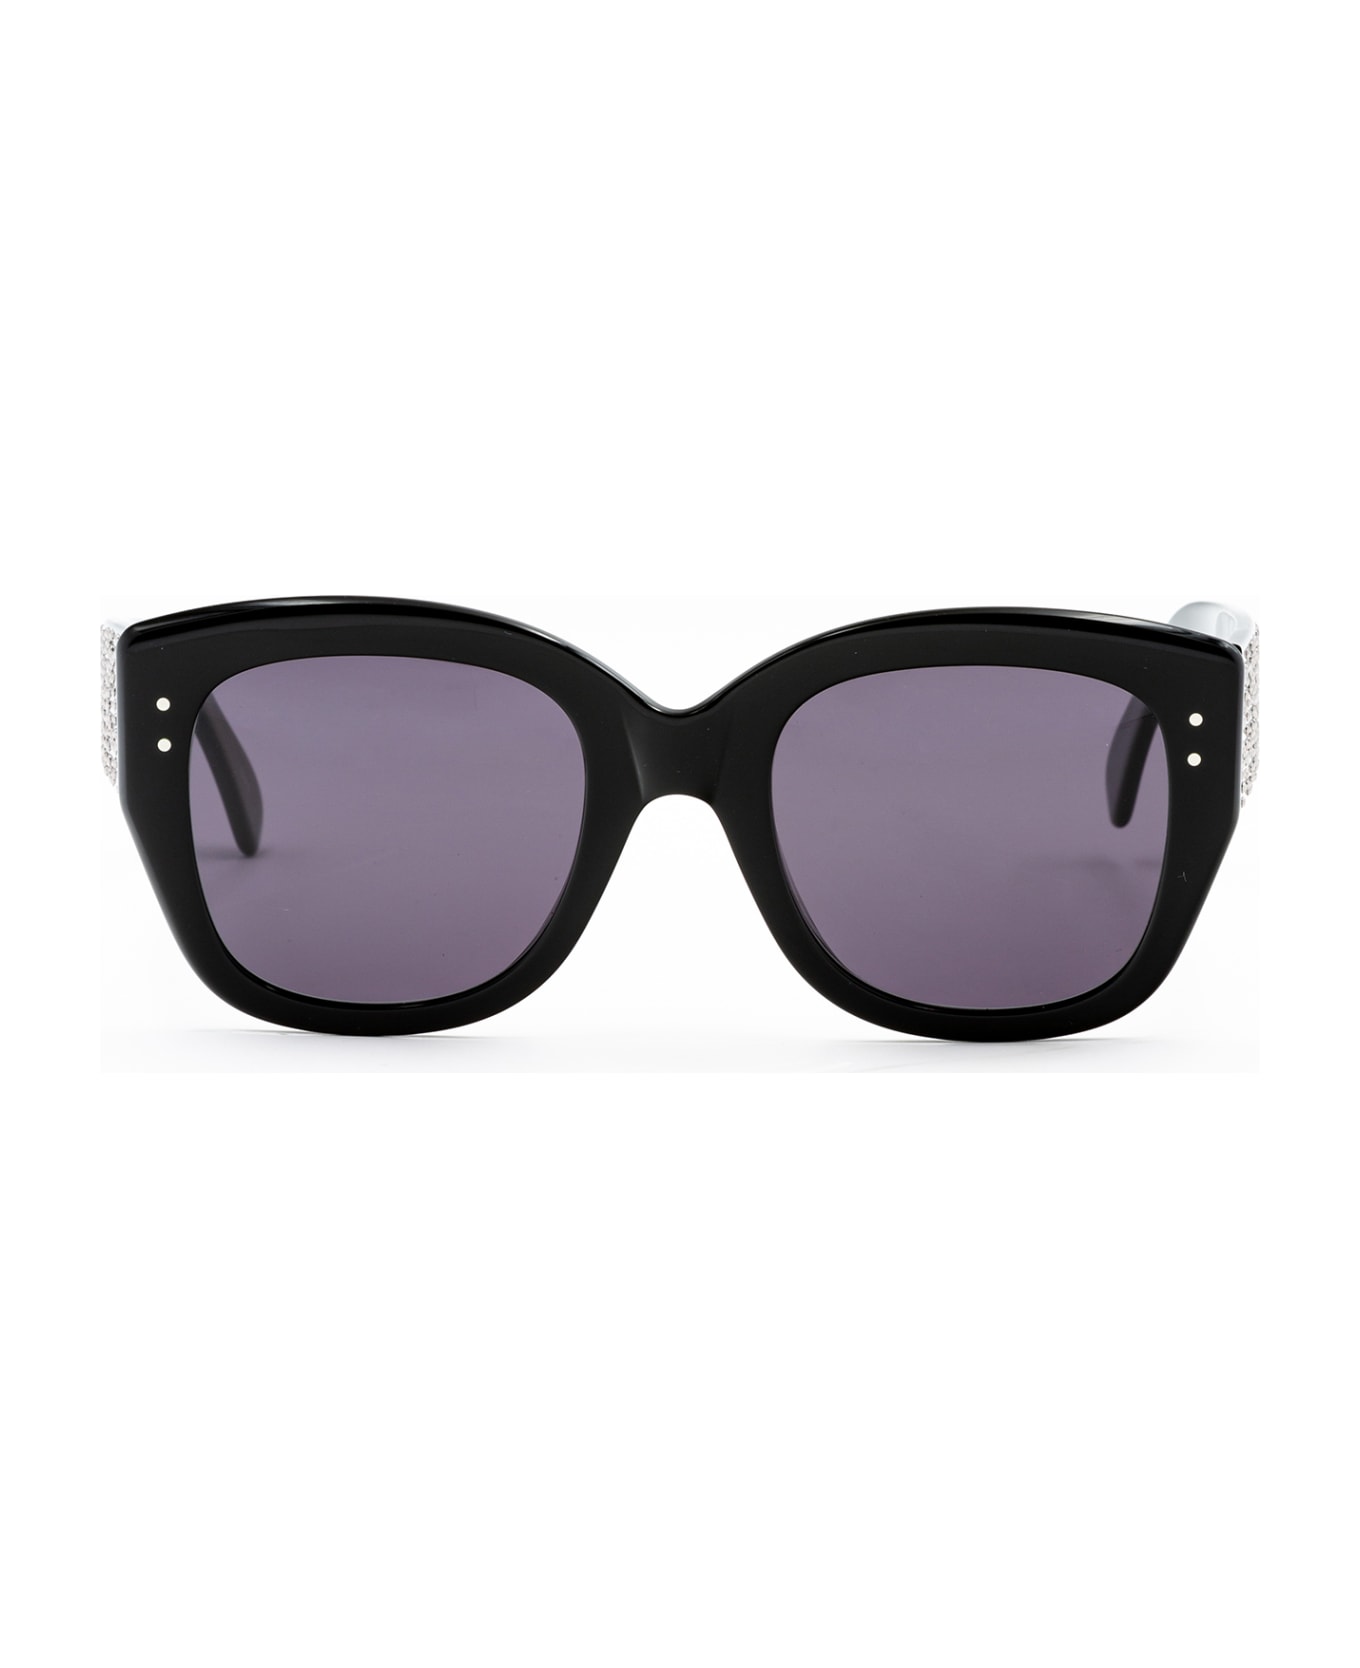 Alaia AA0052S Sunglasses - Black Black Grey サングラス